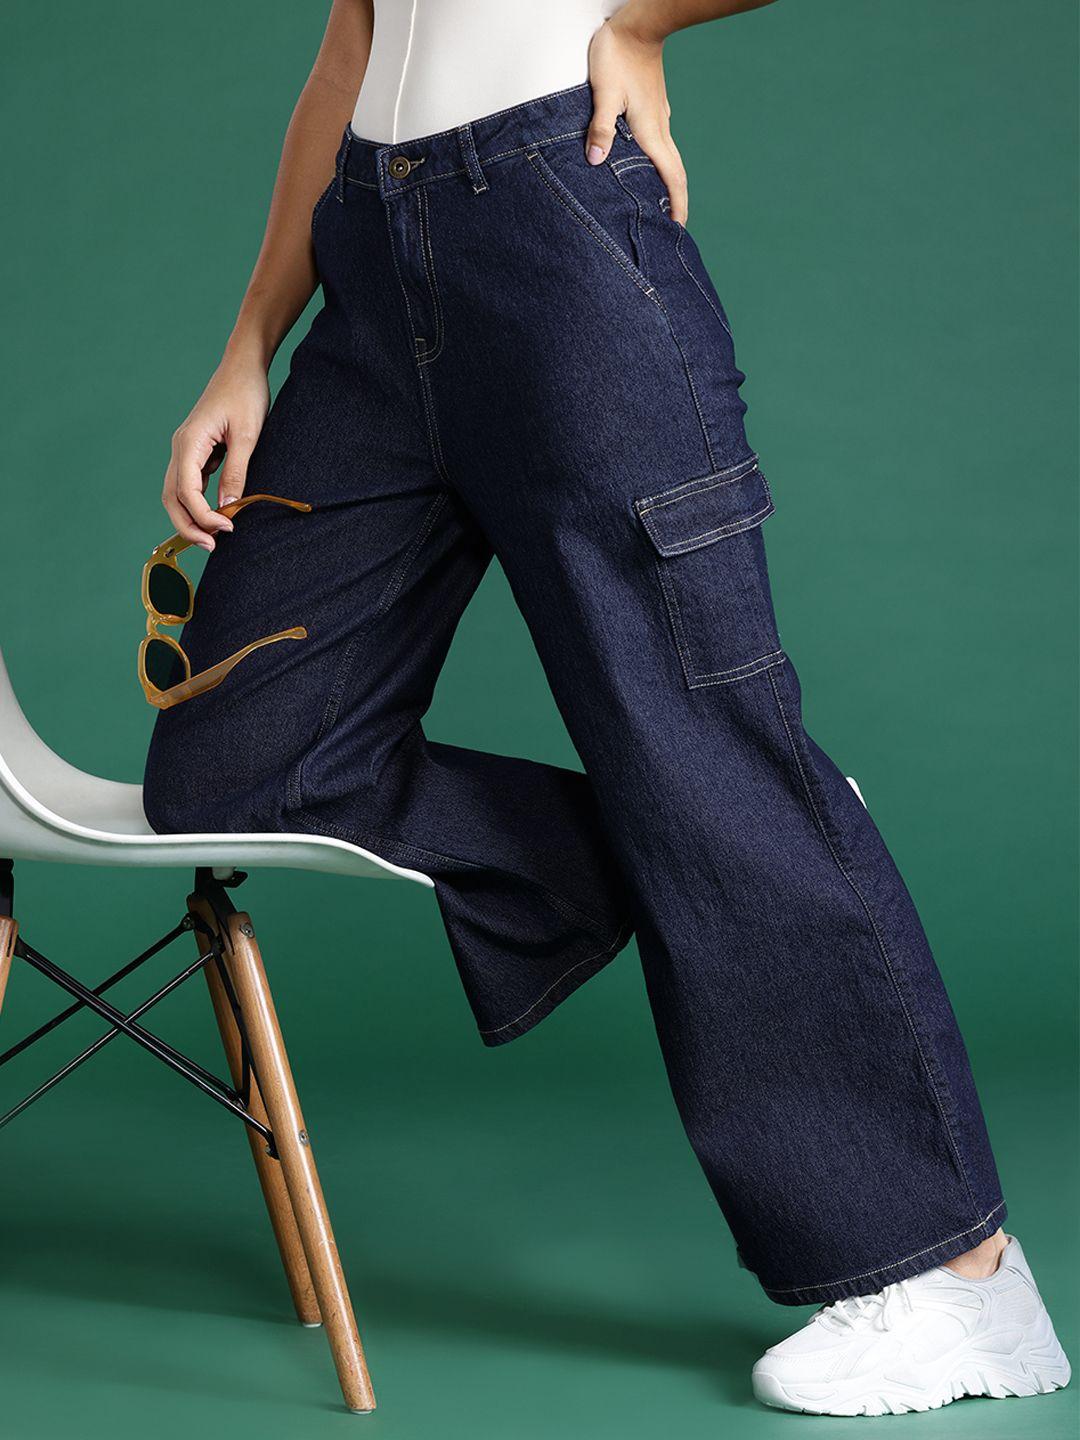 dressberry-women-wide-leg-stretchable-jeans